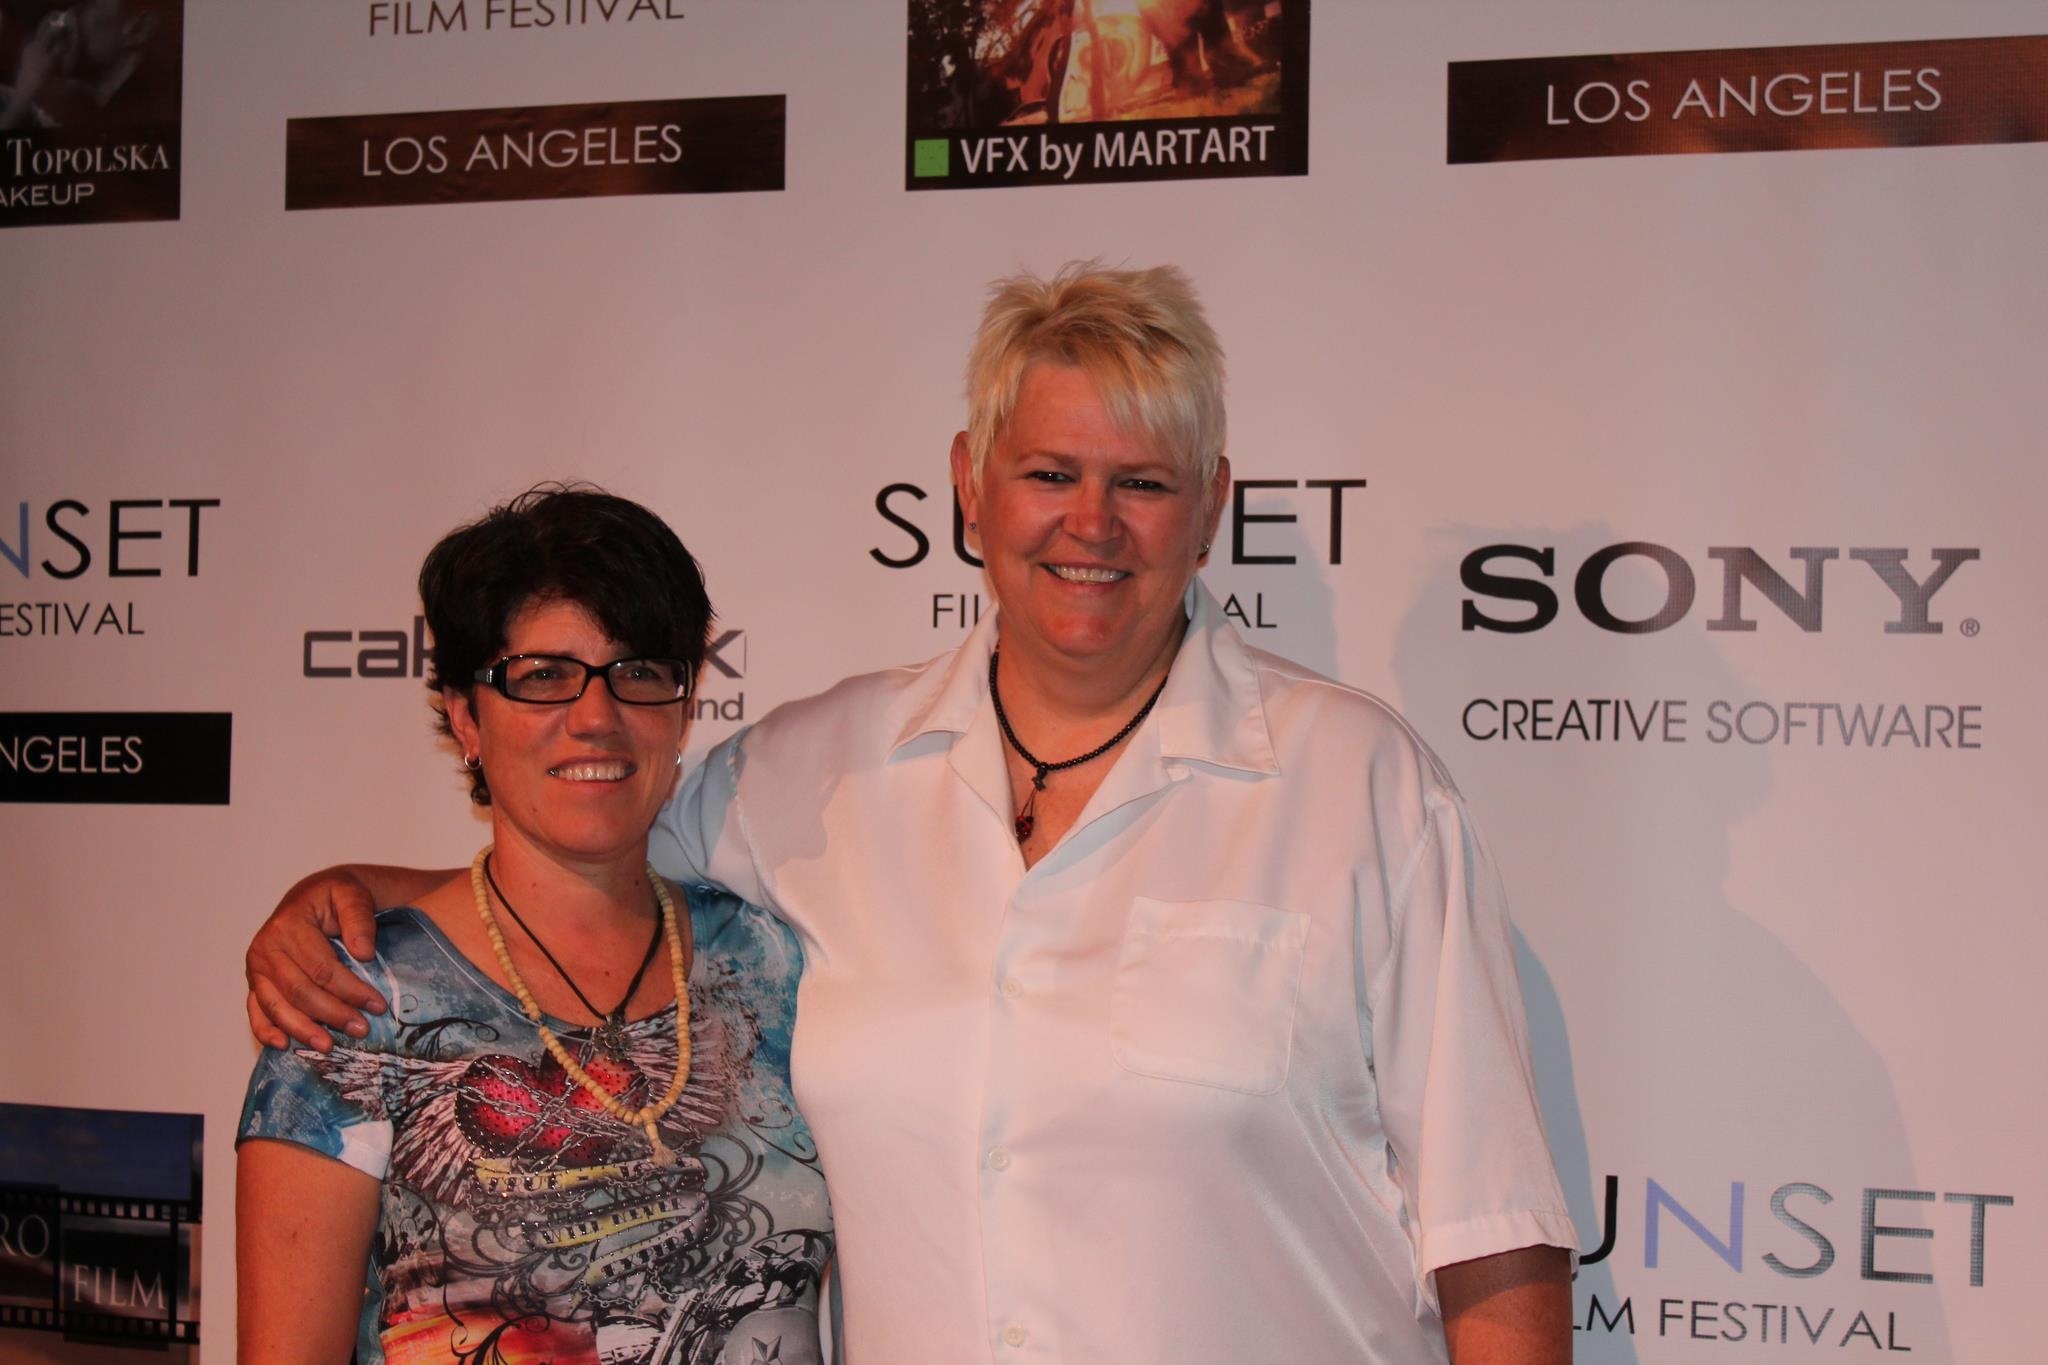 Teresa Parker with Jeanette Caldera at the Sunset International Film Festival 2013